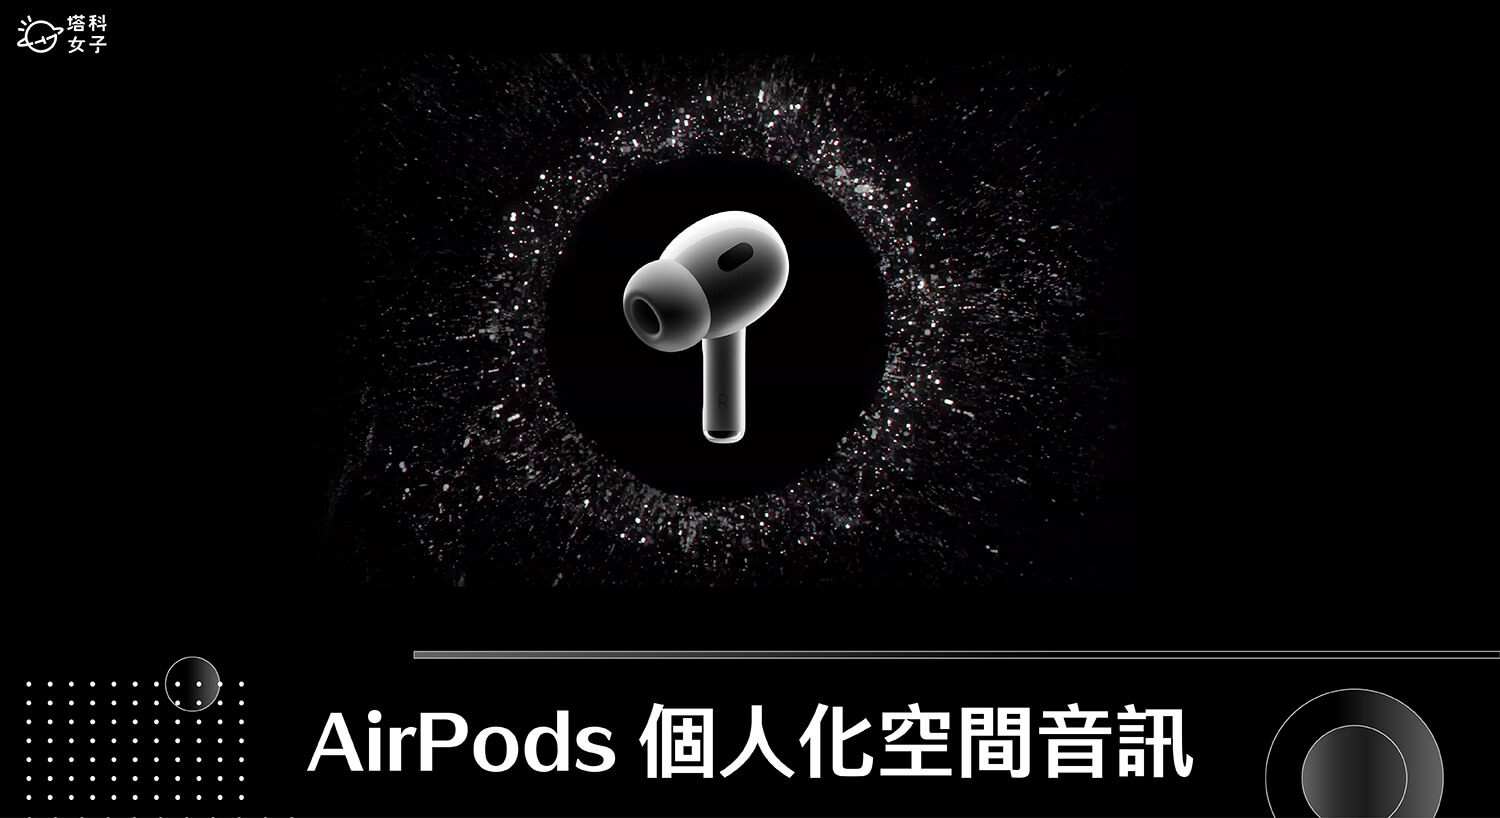 AirPods 個人化空間音訊怎麼用？享受沈浸式 3D 環繞音效體驗